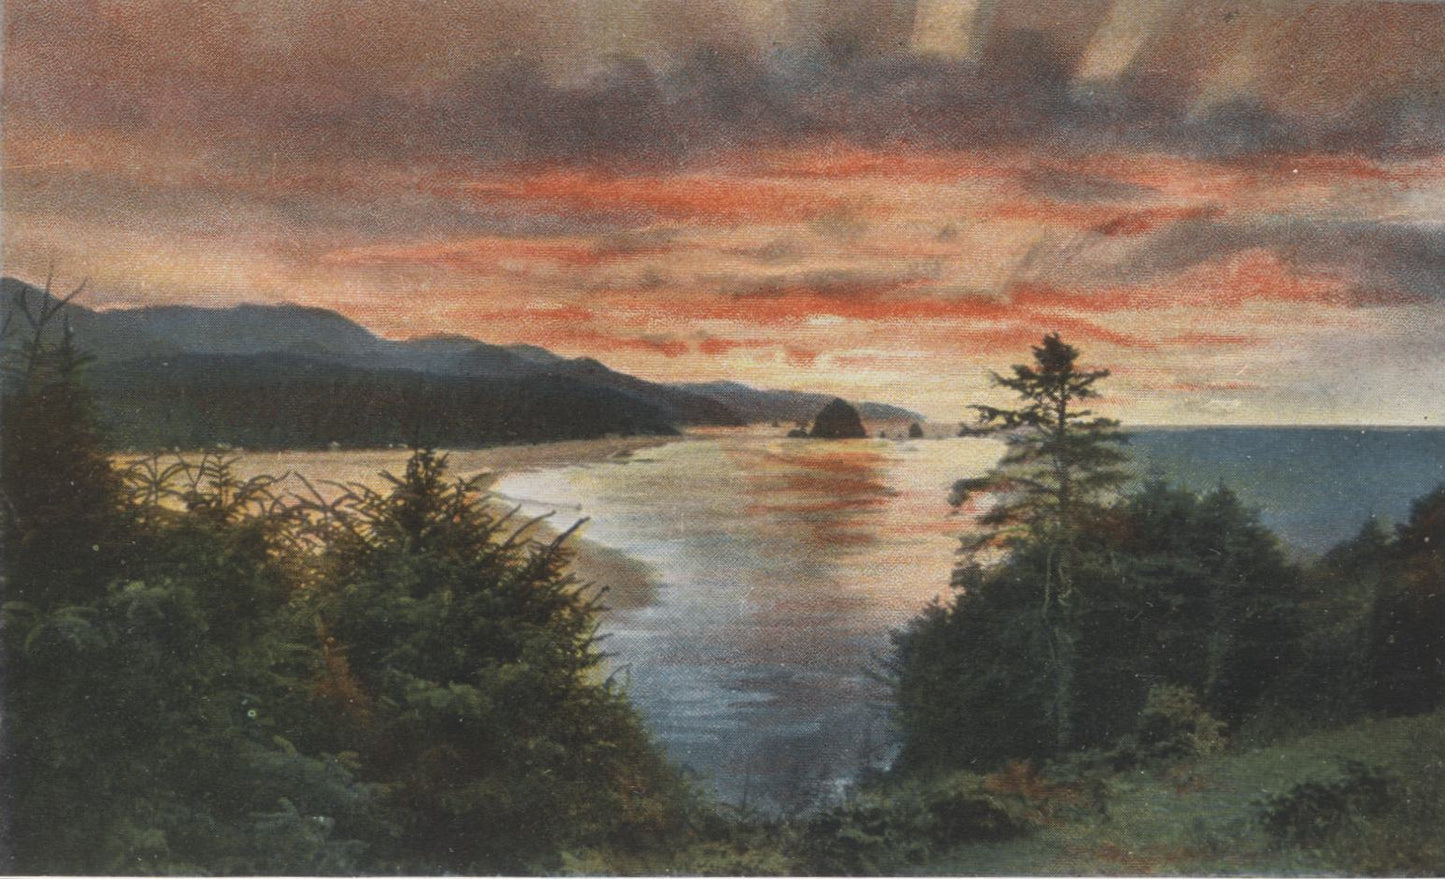 Oregon Coast Highway Vintage Souvenir Postcard Folder